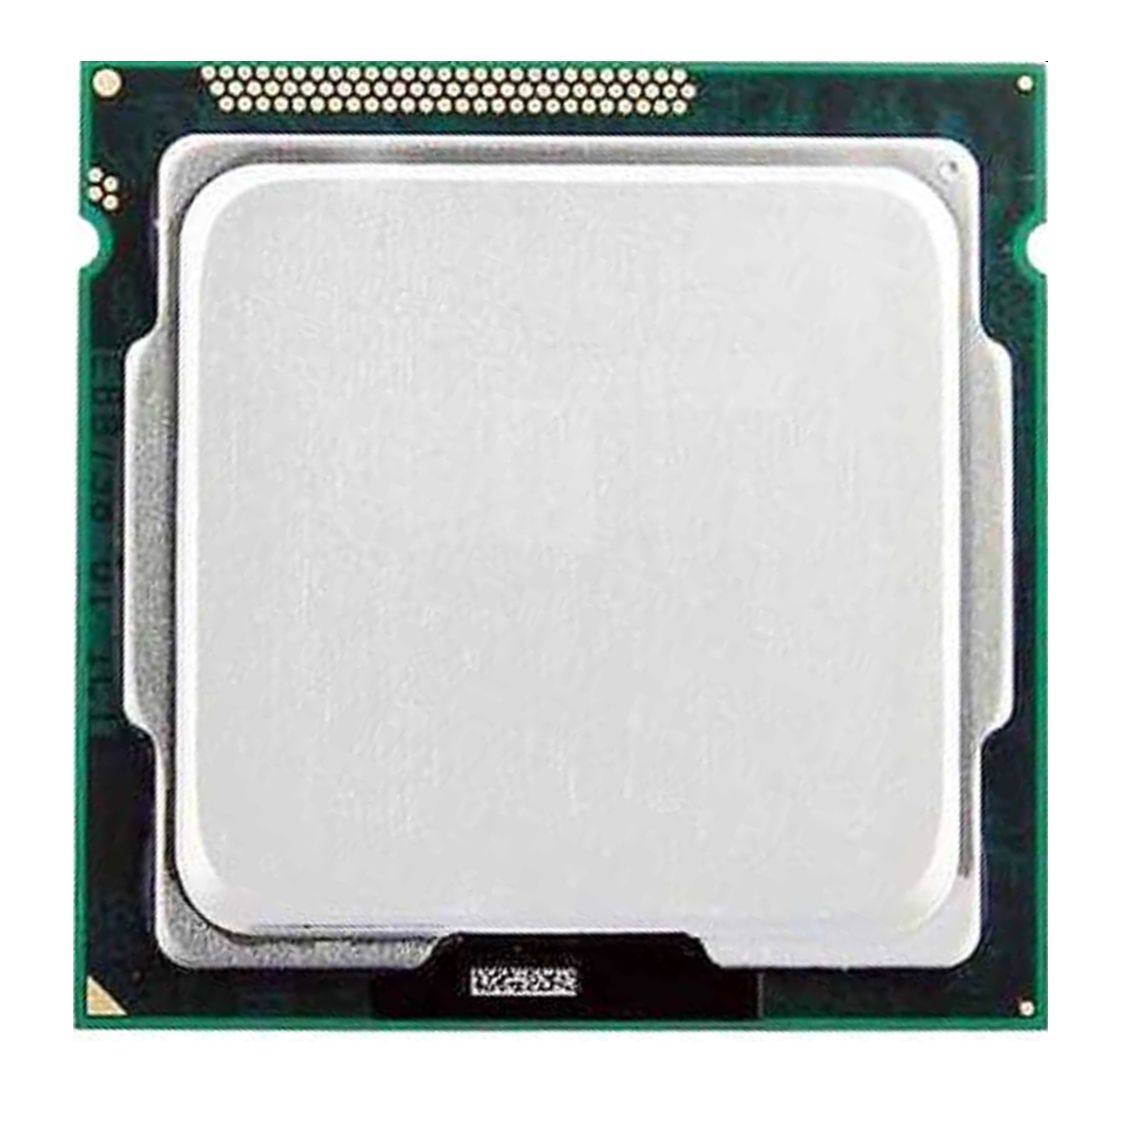 Intel Pentium Dual-Core G6950 / 2.8 GHz / Socket 1156 (LGA1156) SLBTG